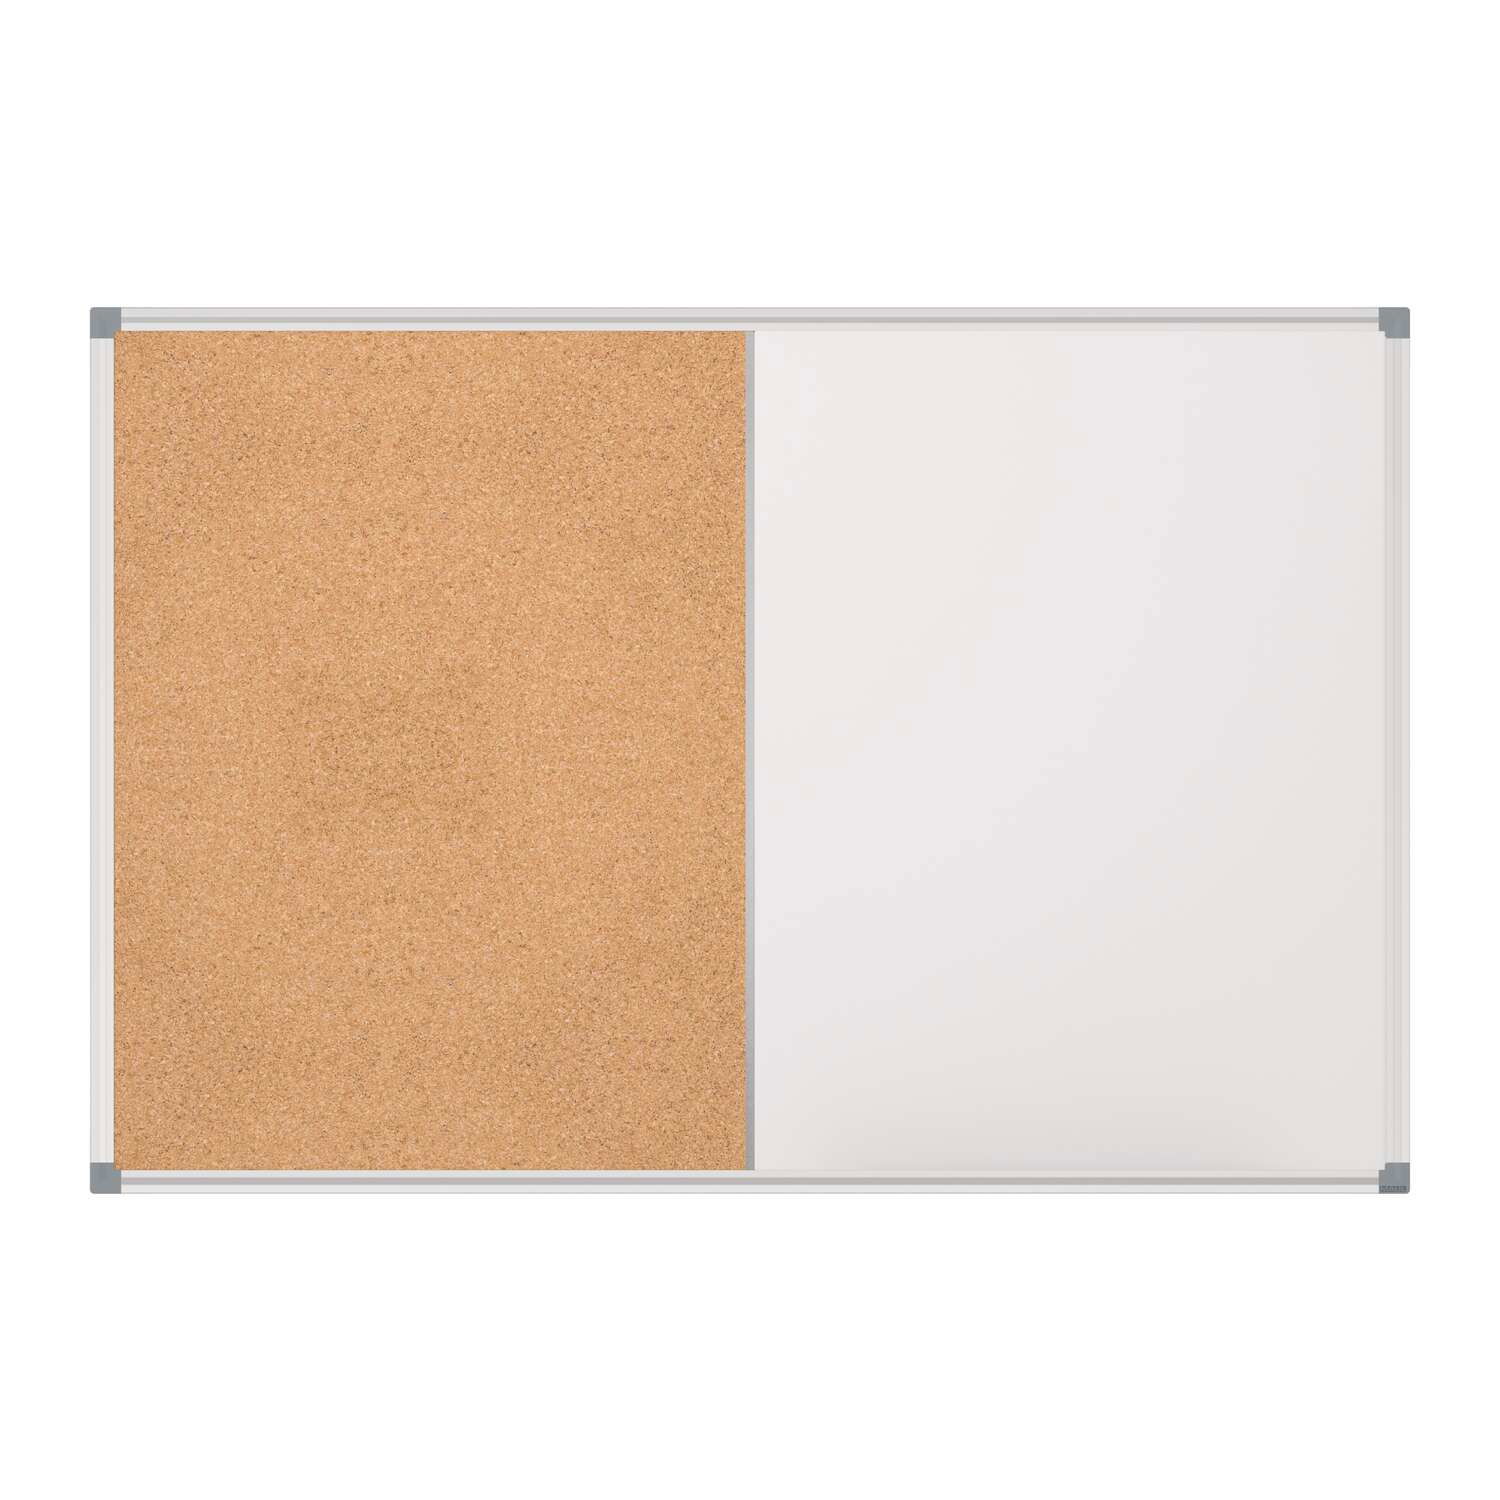 Combiboard MAULstandard, 90x120 cm, Kork/Whiteboard